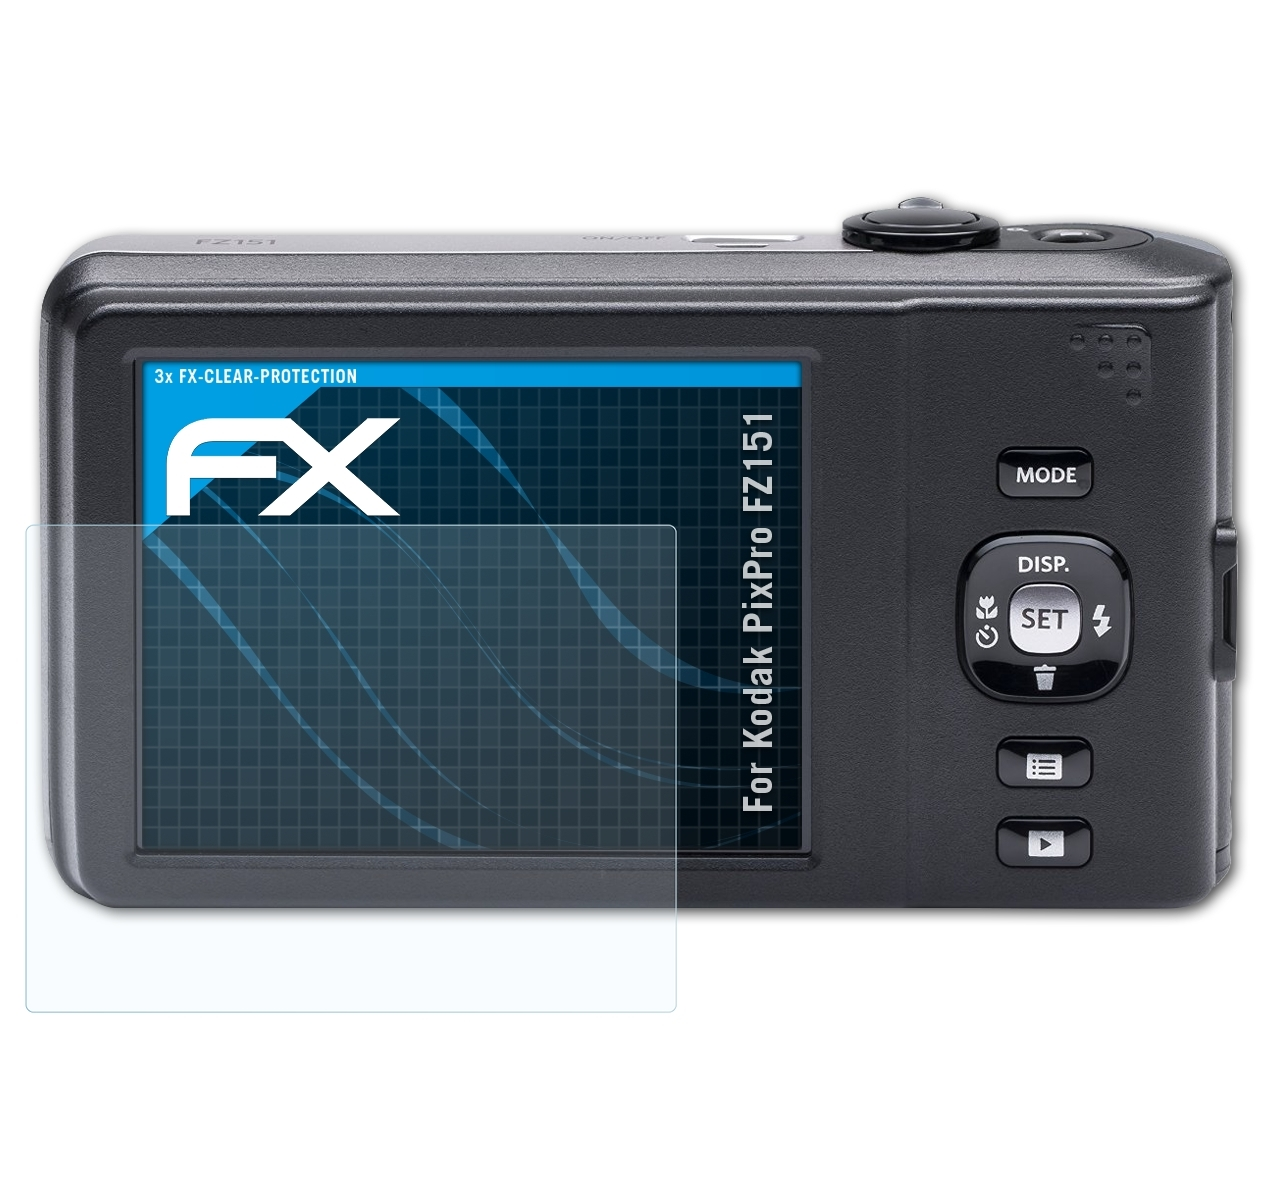 ATFOLIX 3x FX-Clear Displayschutz(für FZ151) PixPro Kodak